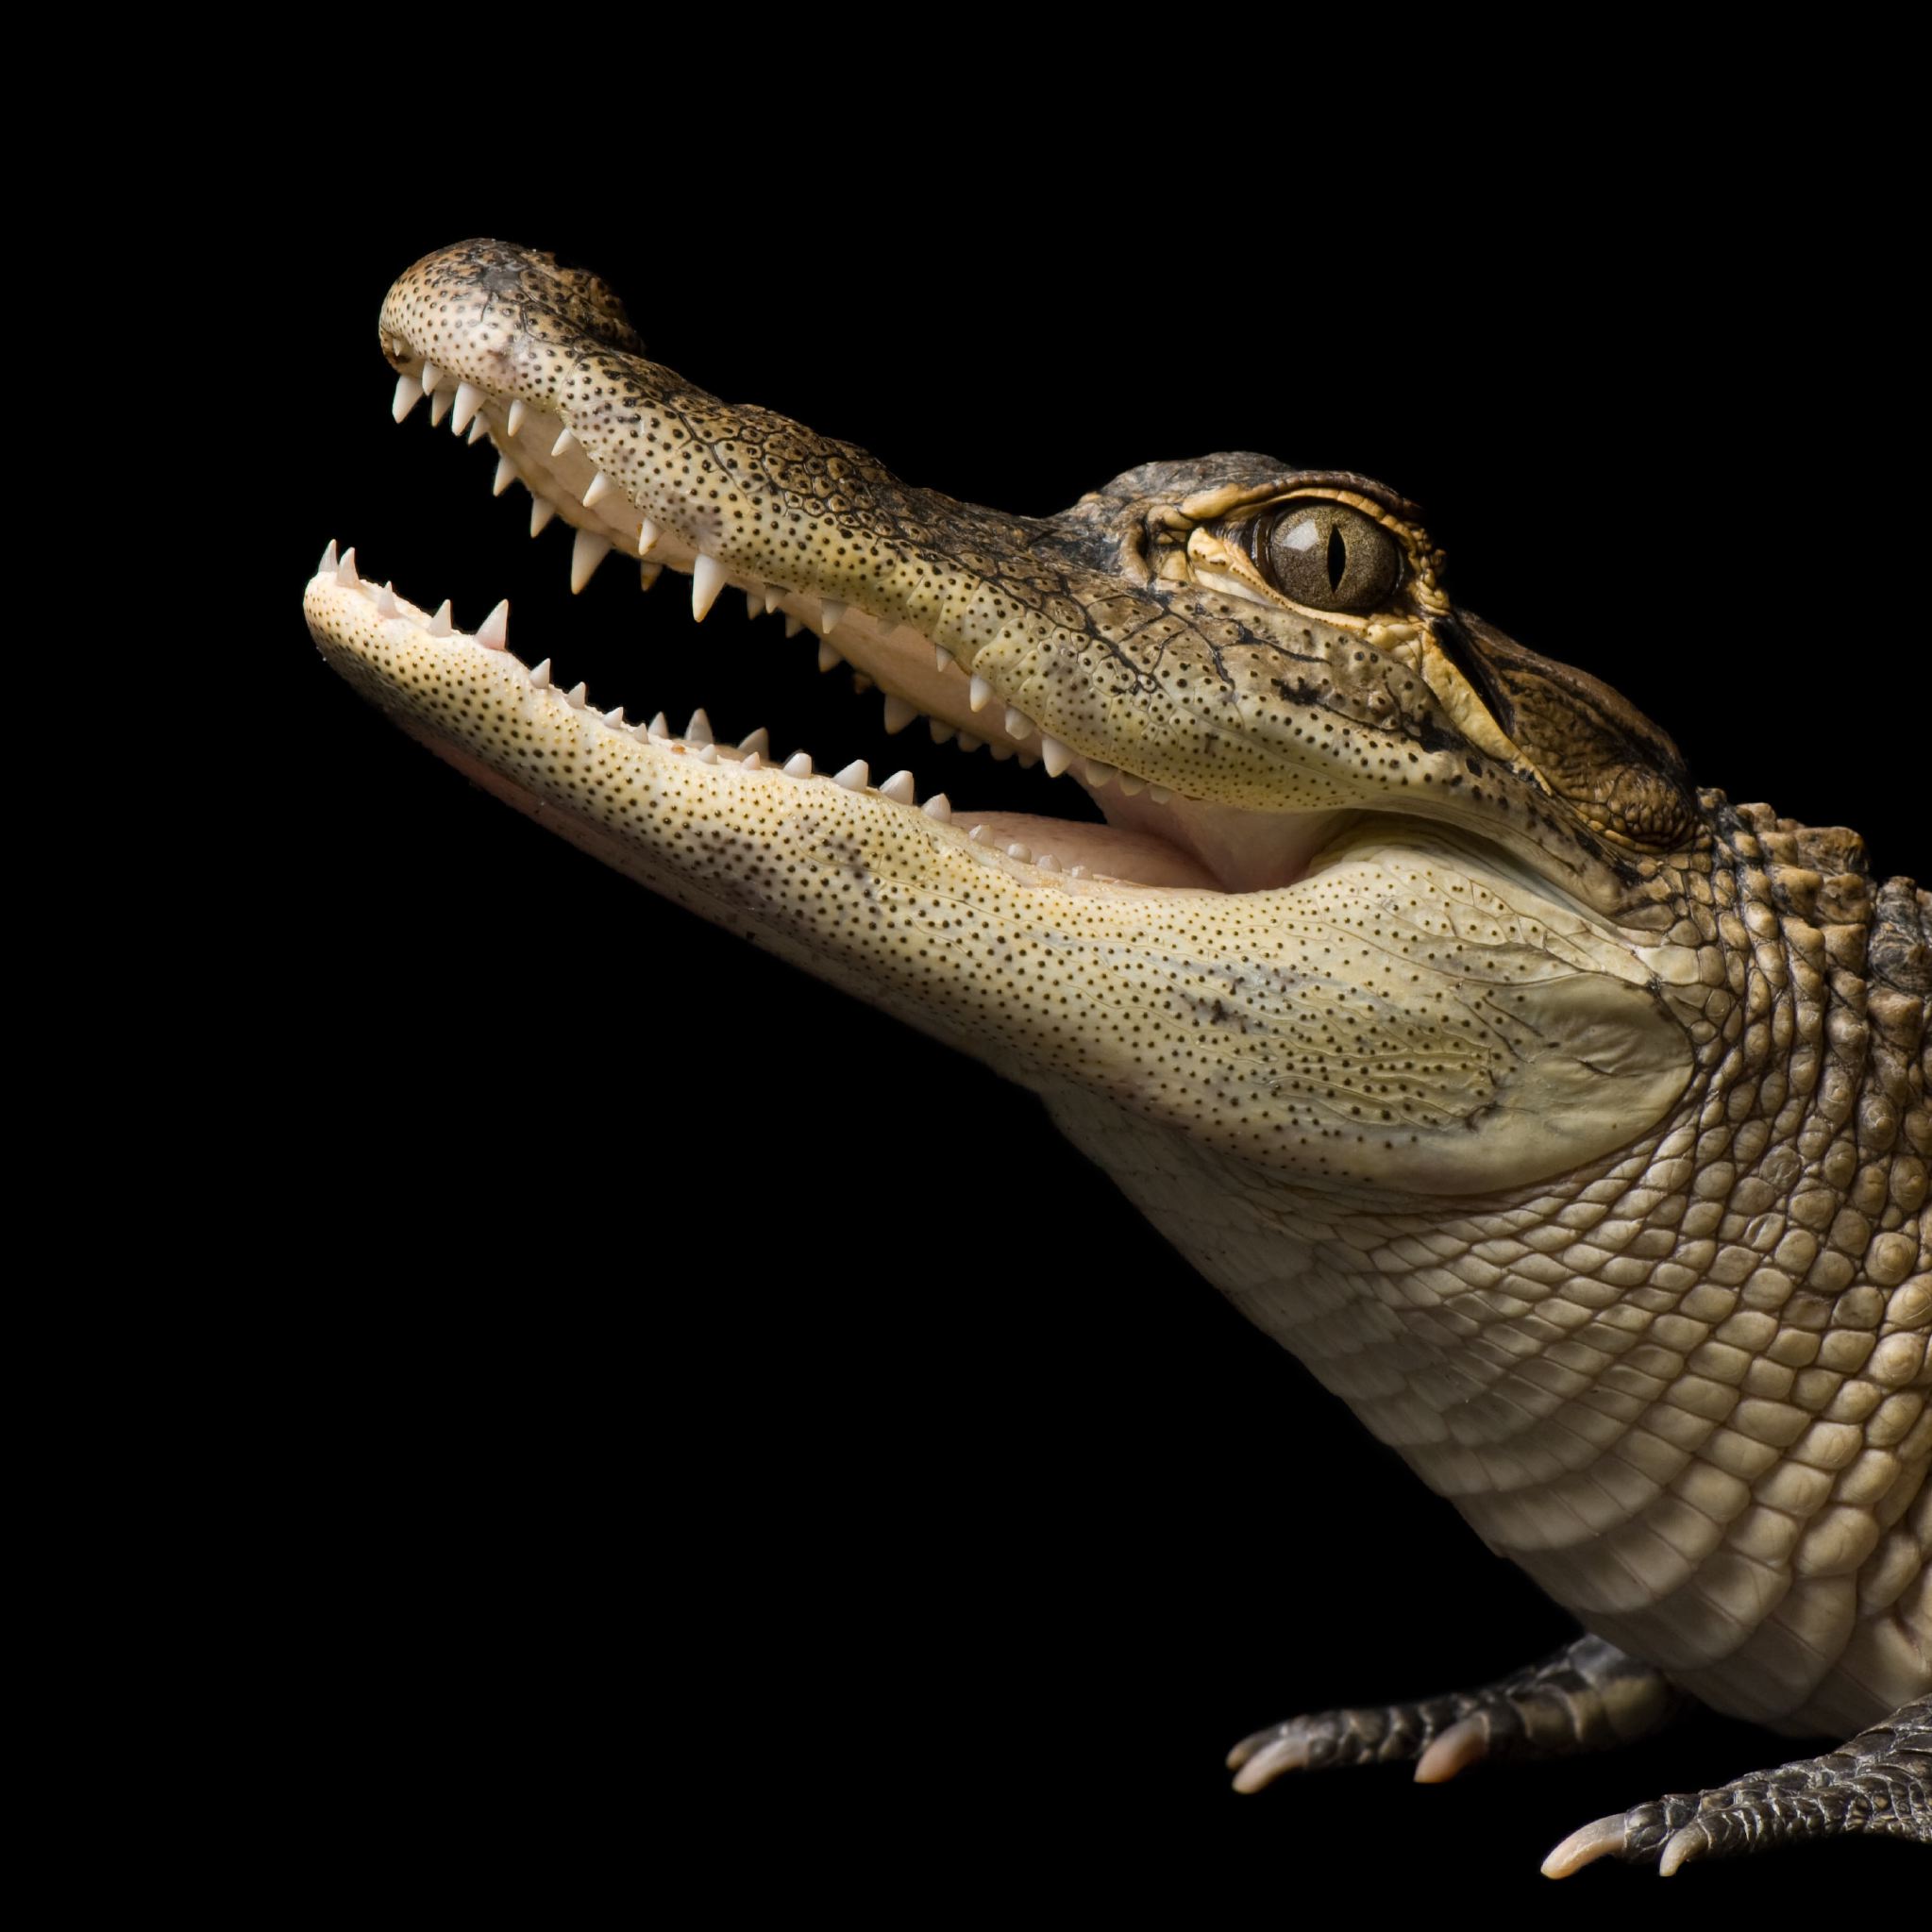 American Alligator | National Geographic